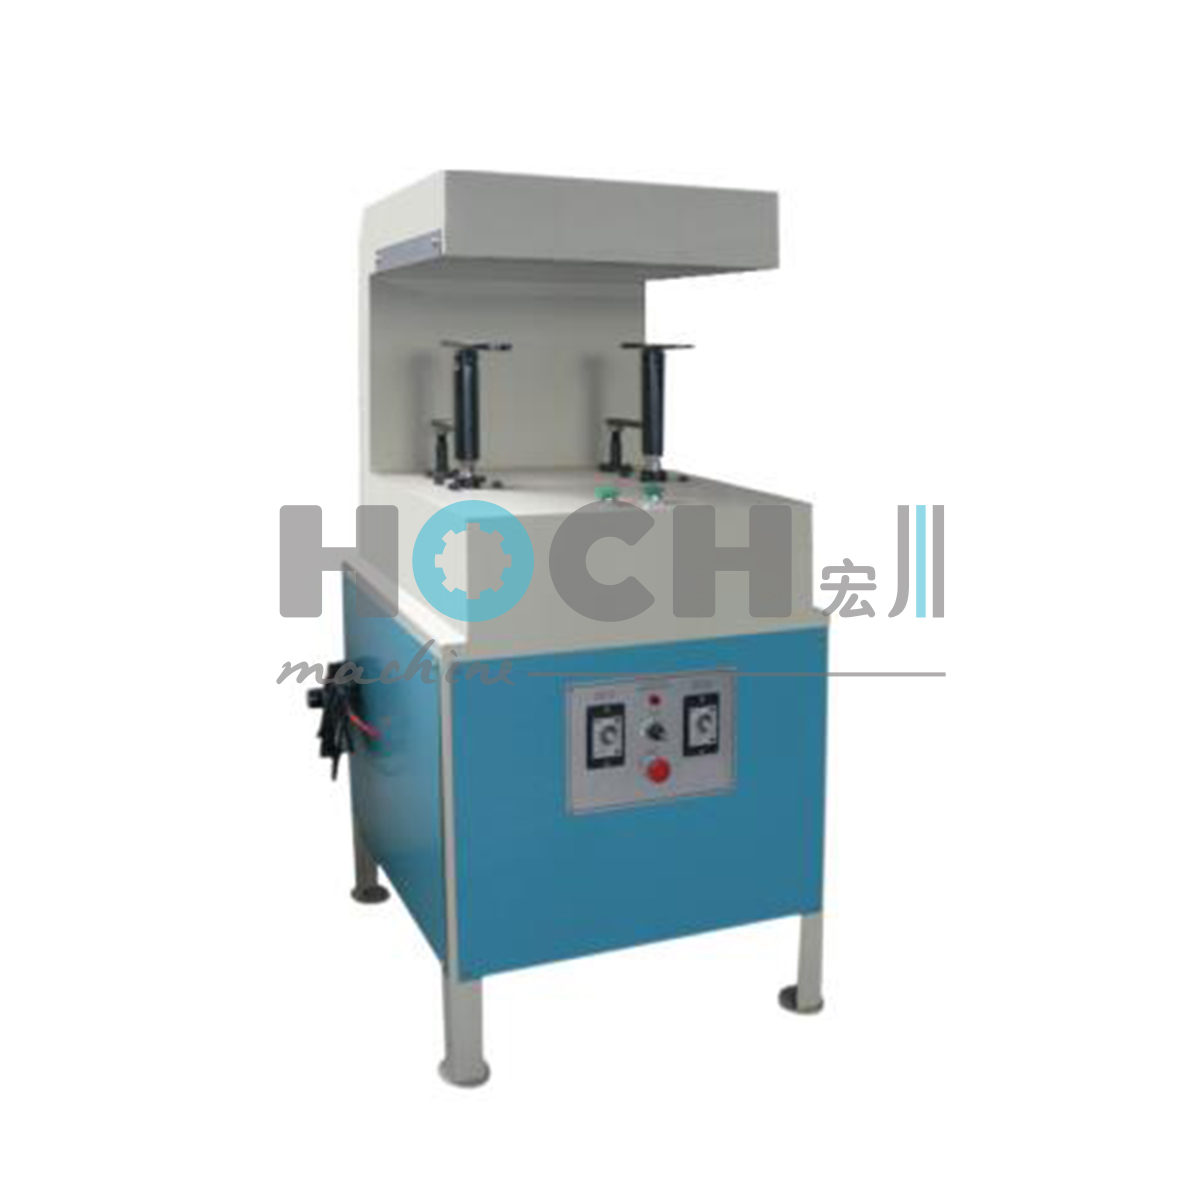 HC-202 INSOLE PRESSING MACHINE 